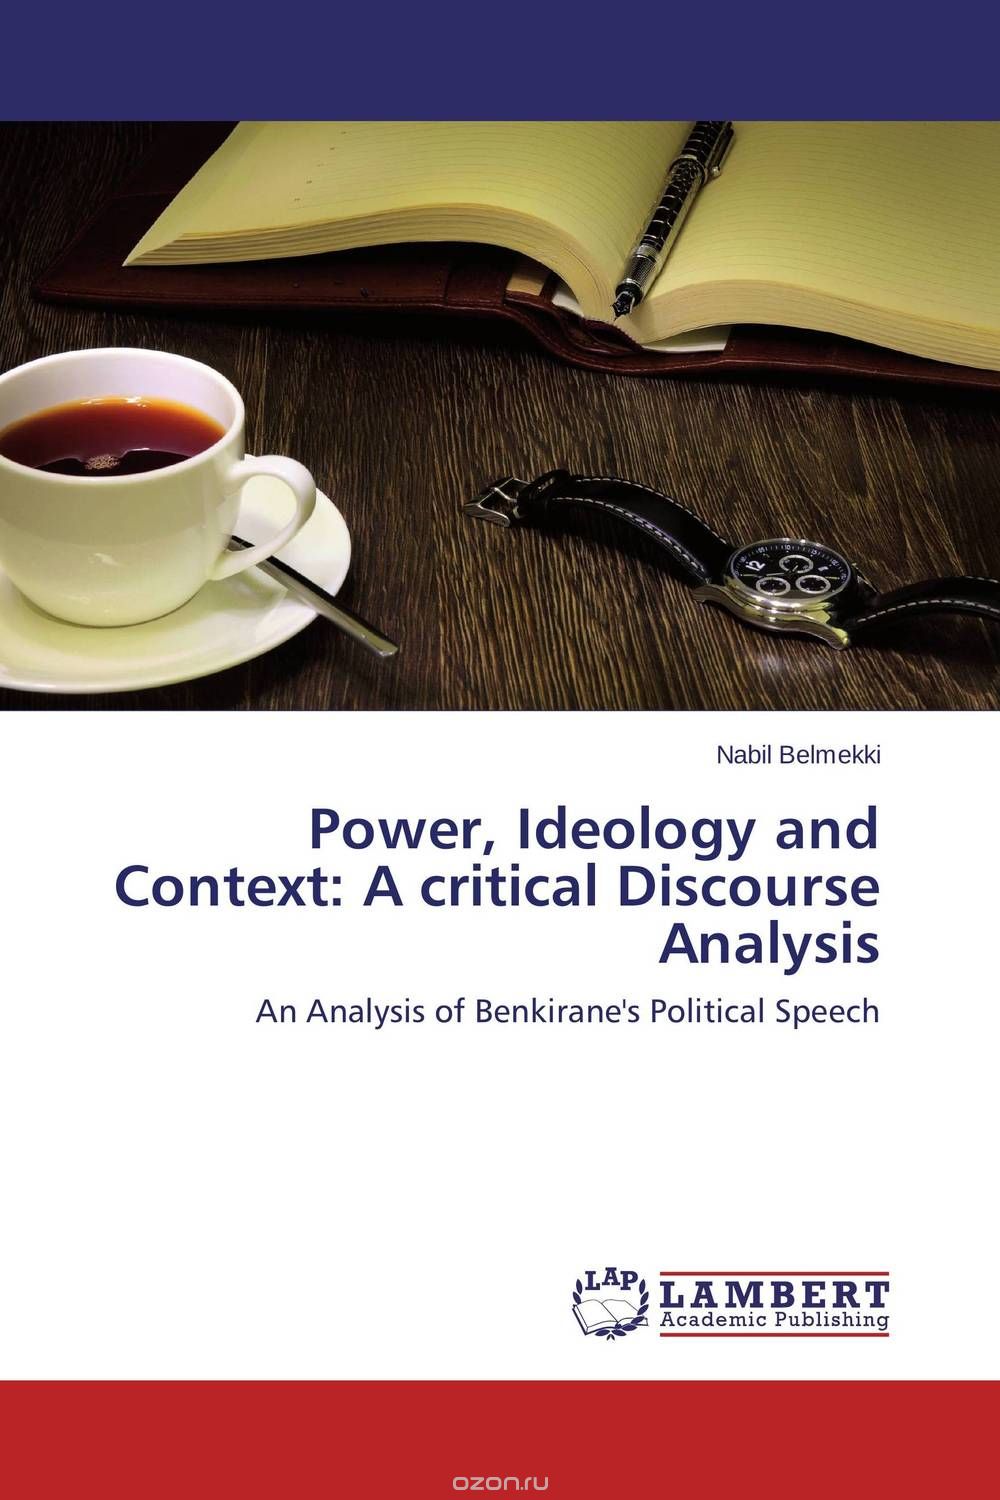 Скачать книгу "Power, Ideology and Context: A critical Discourse Analysis"